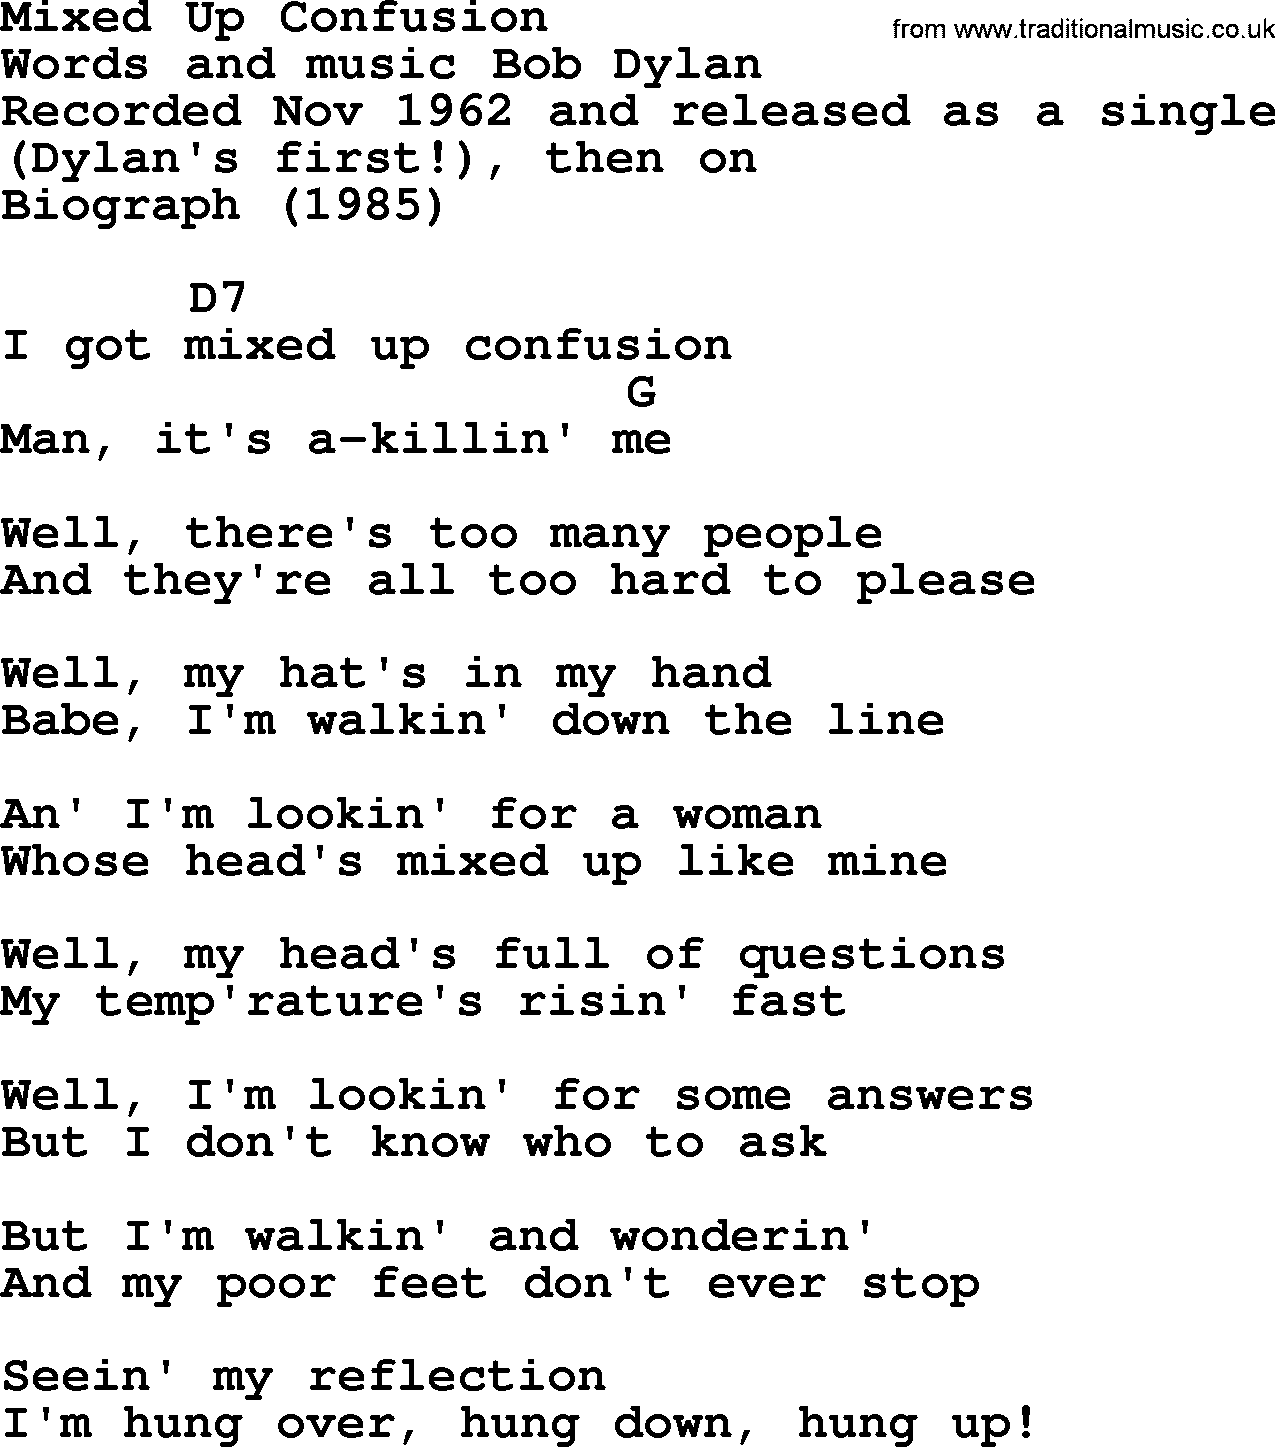 Bob Dylan song, lyrics with chords - Mixed Up Confusion